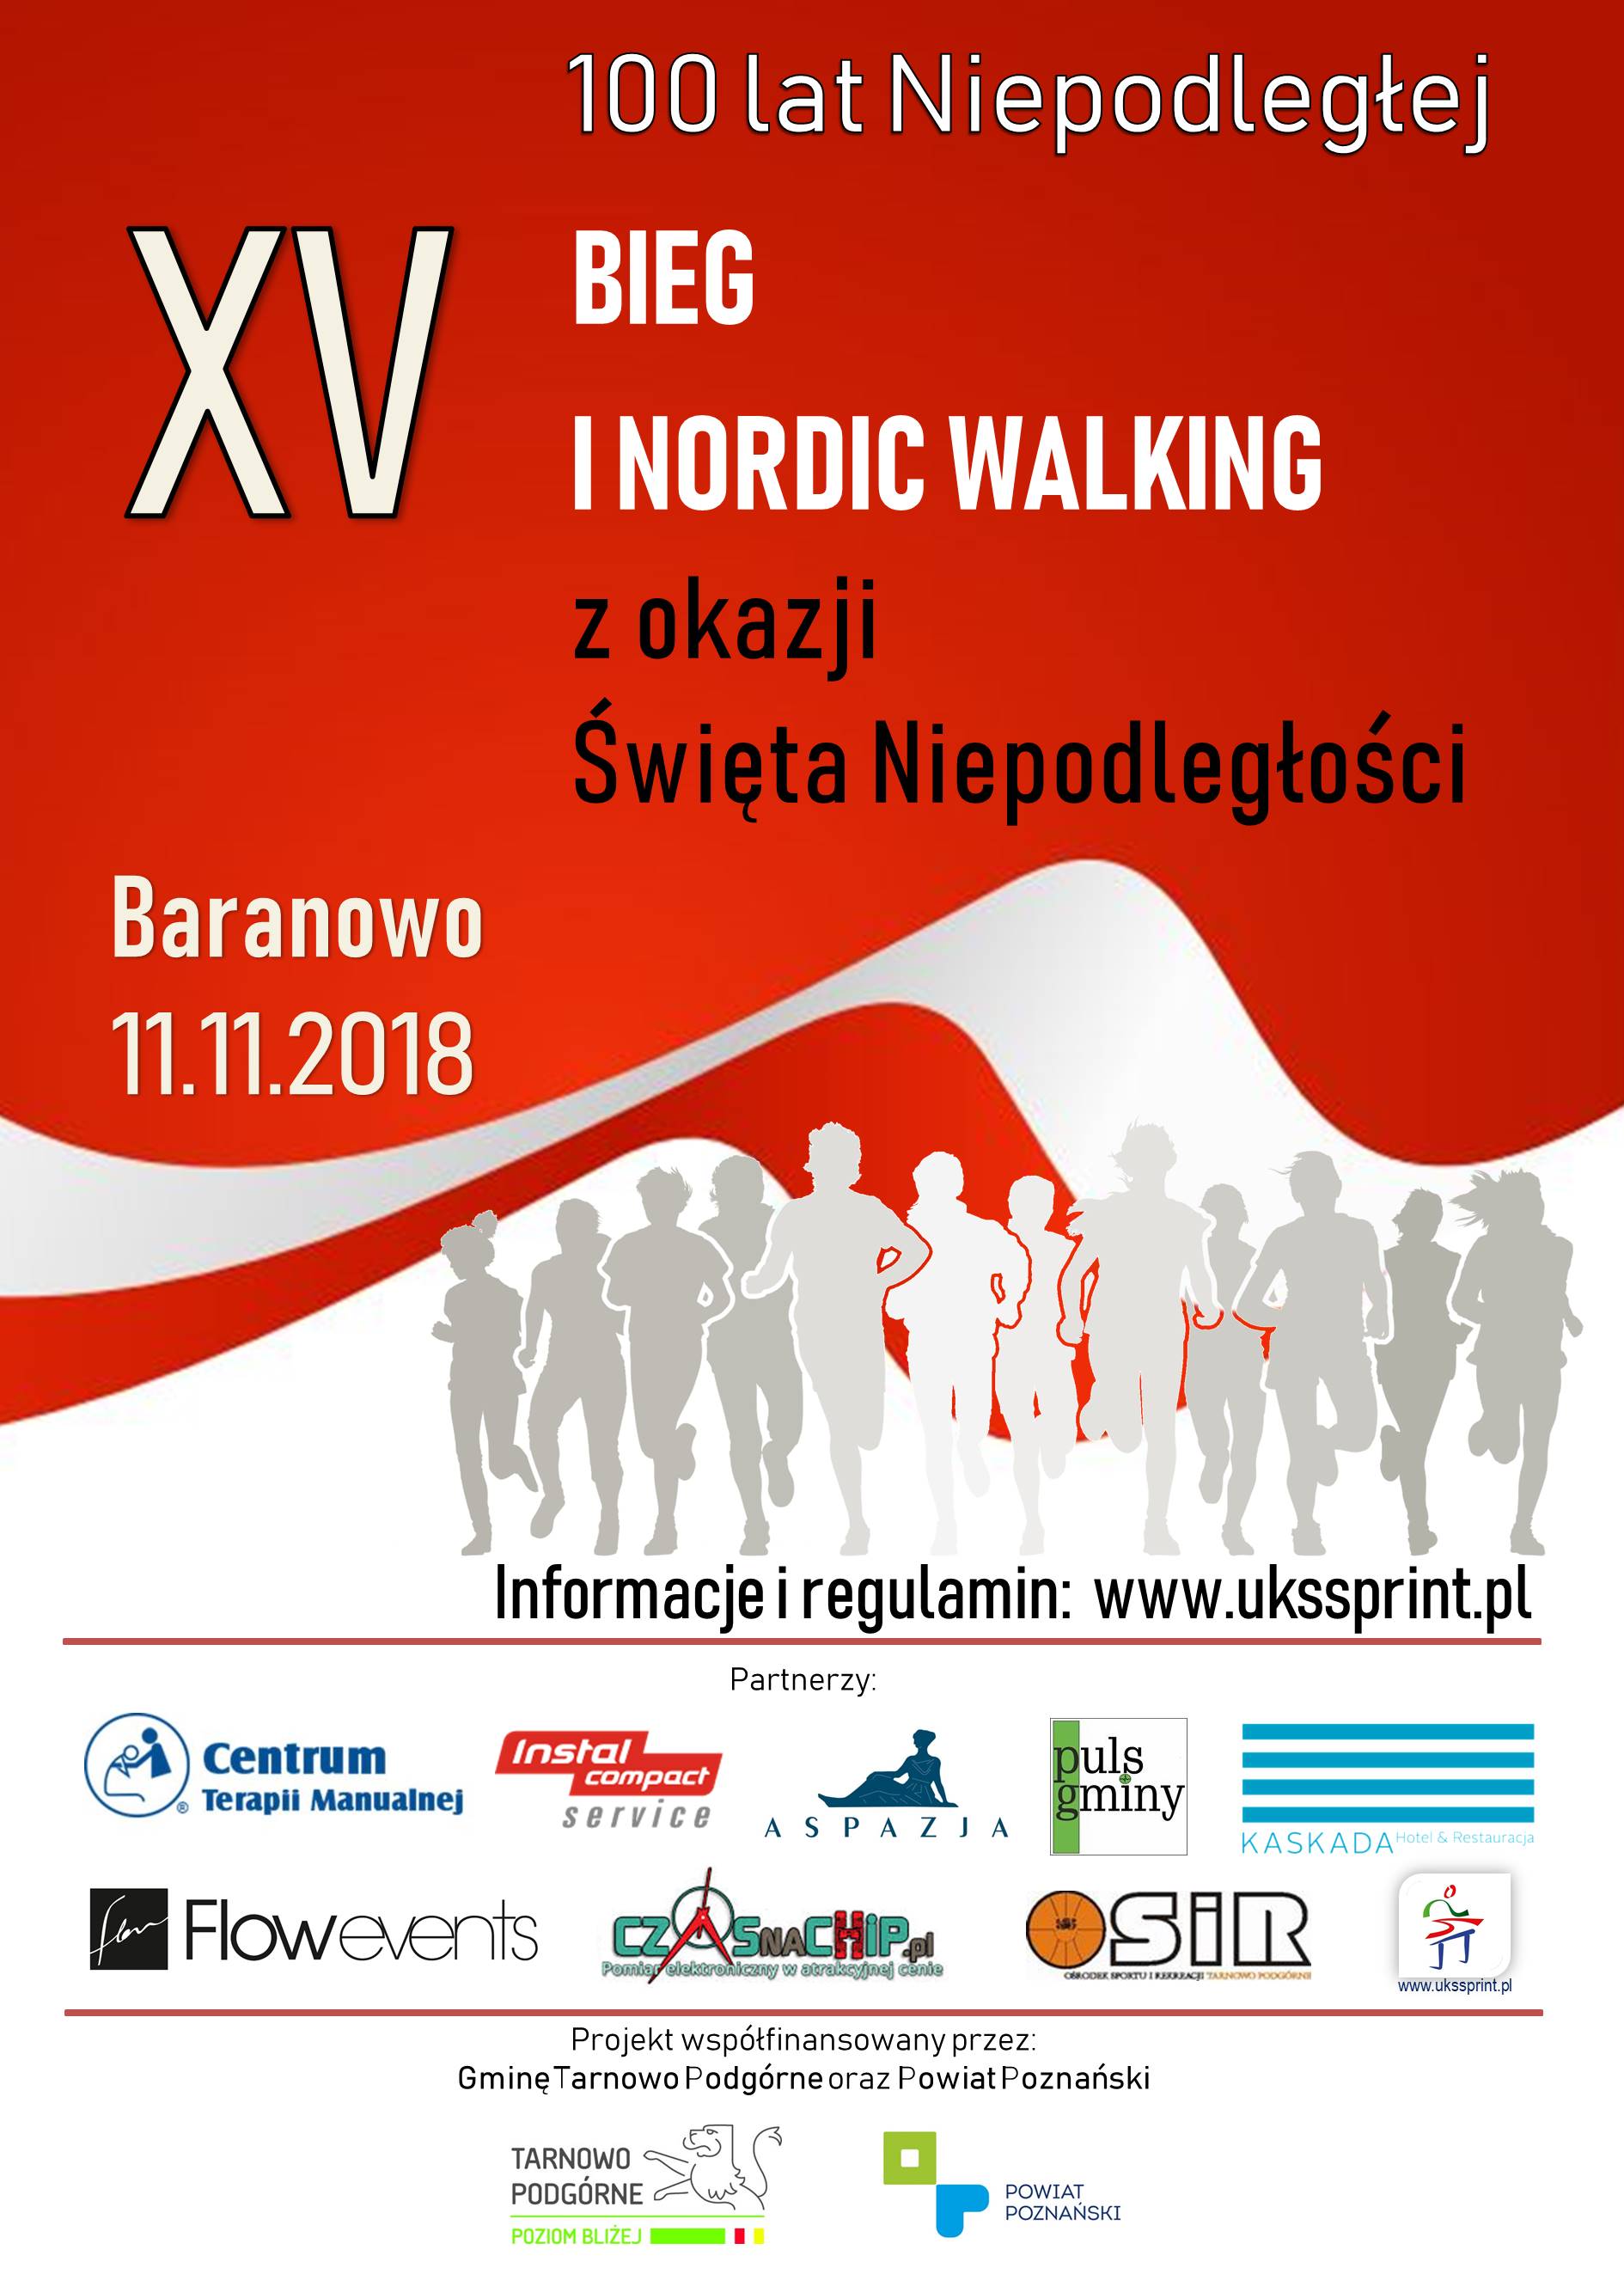 Bieg i Nordic Walking